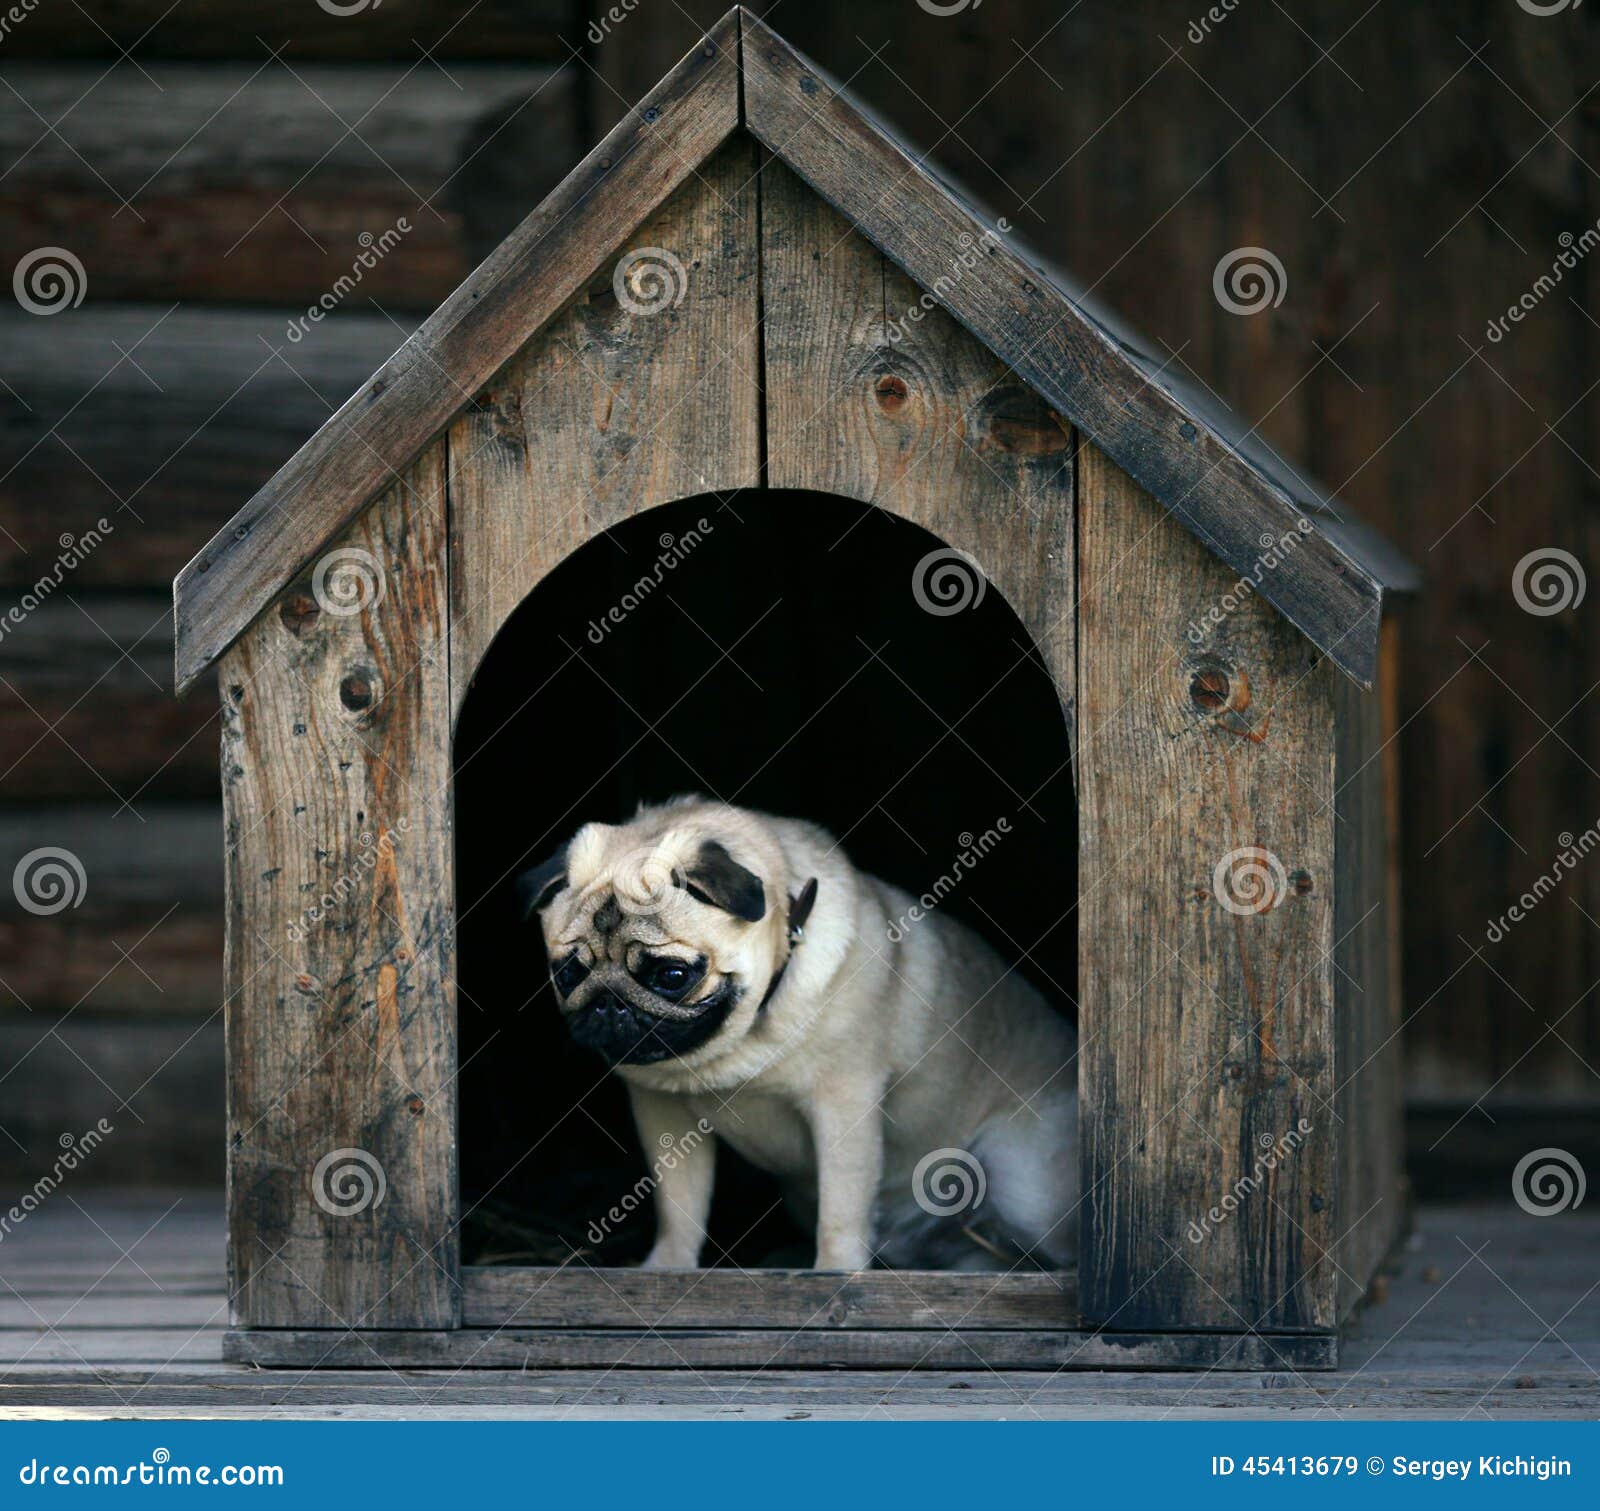 sad-pug-dog-dog-house-funny-45413679.jpg